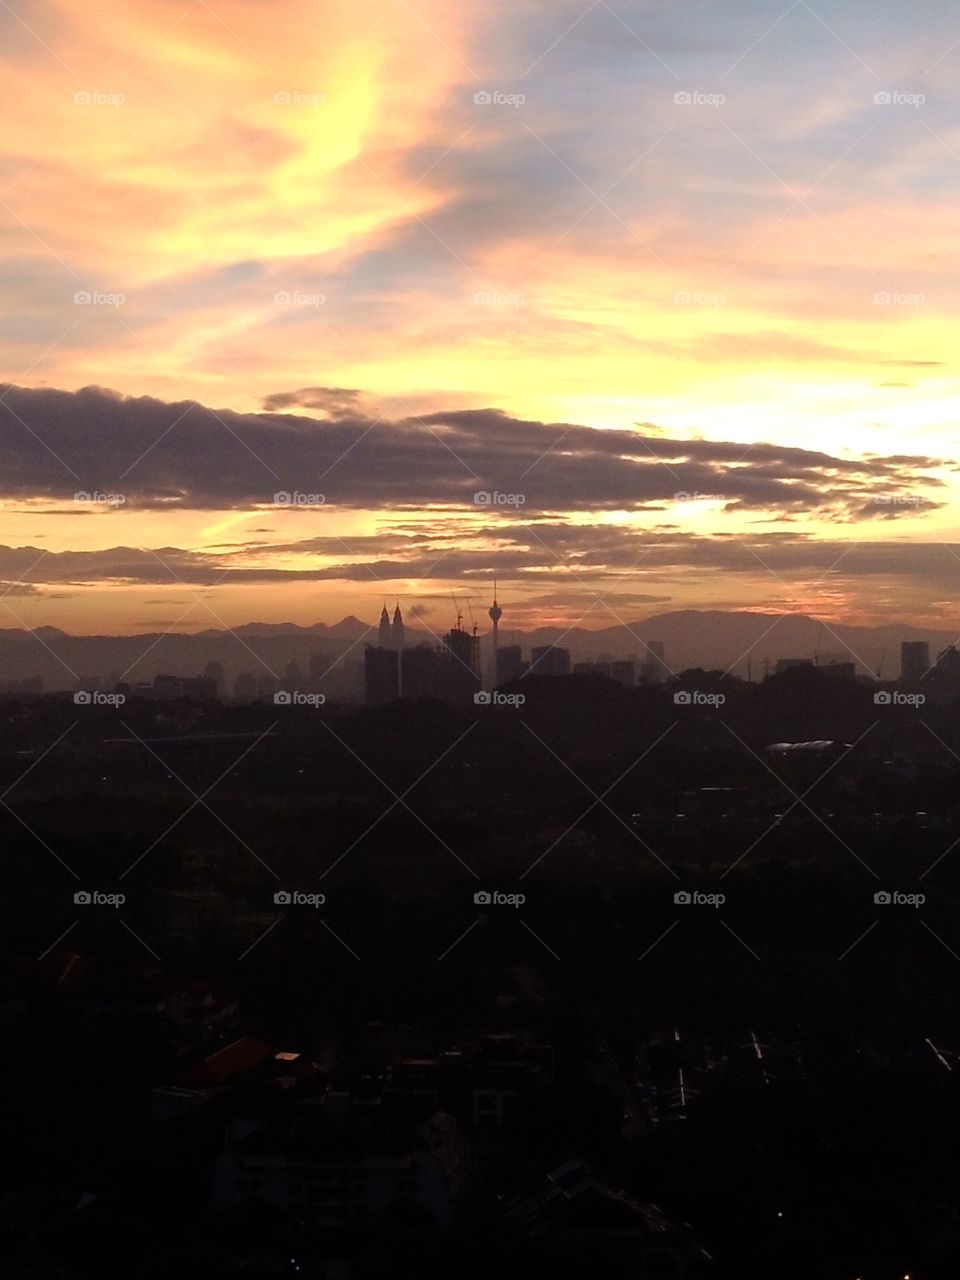 Kuala Lumpur Skyline. Mornings before heading into work 